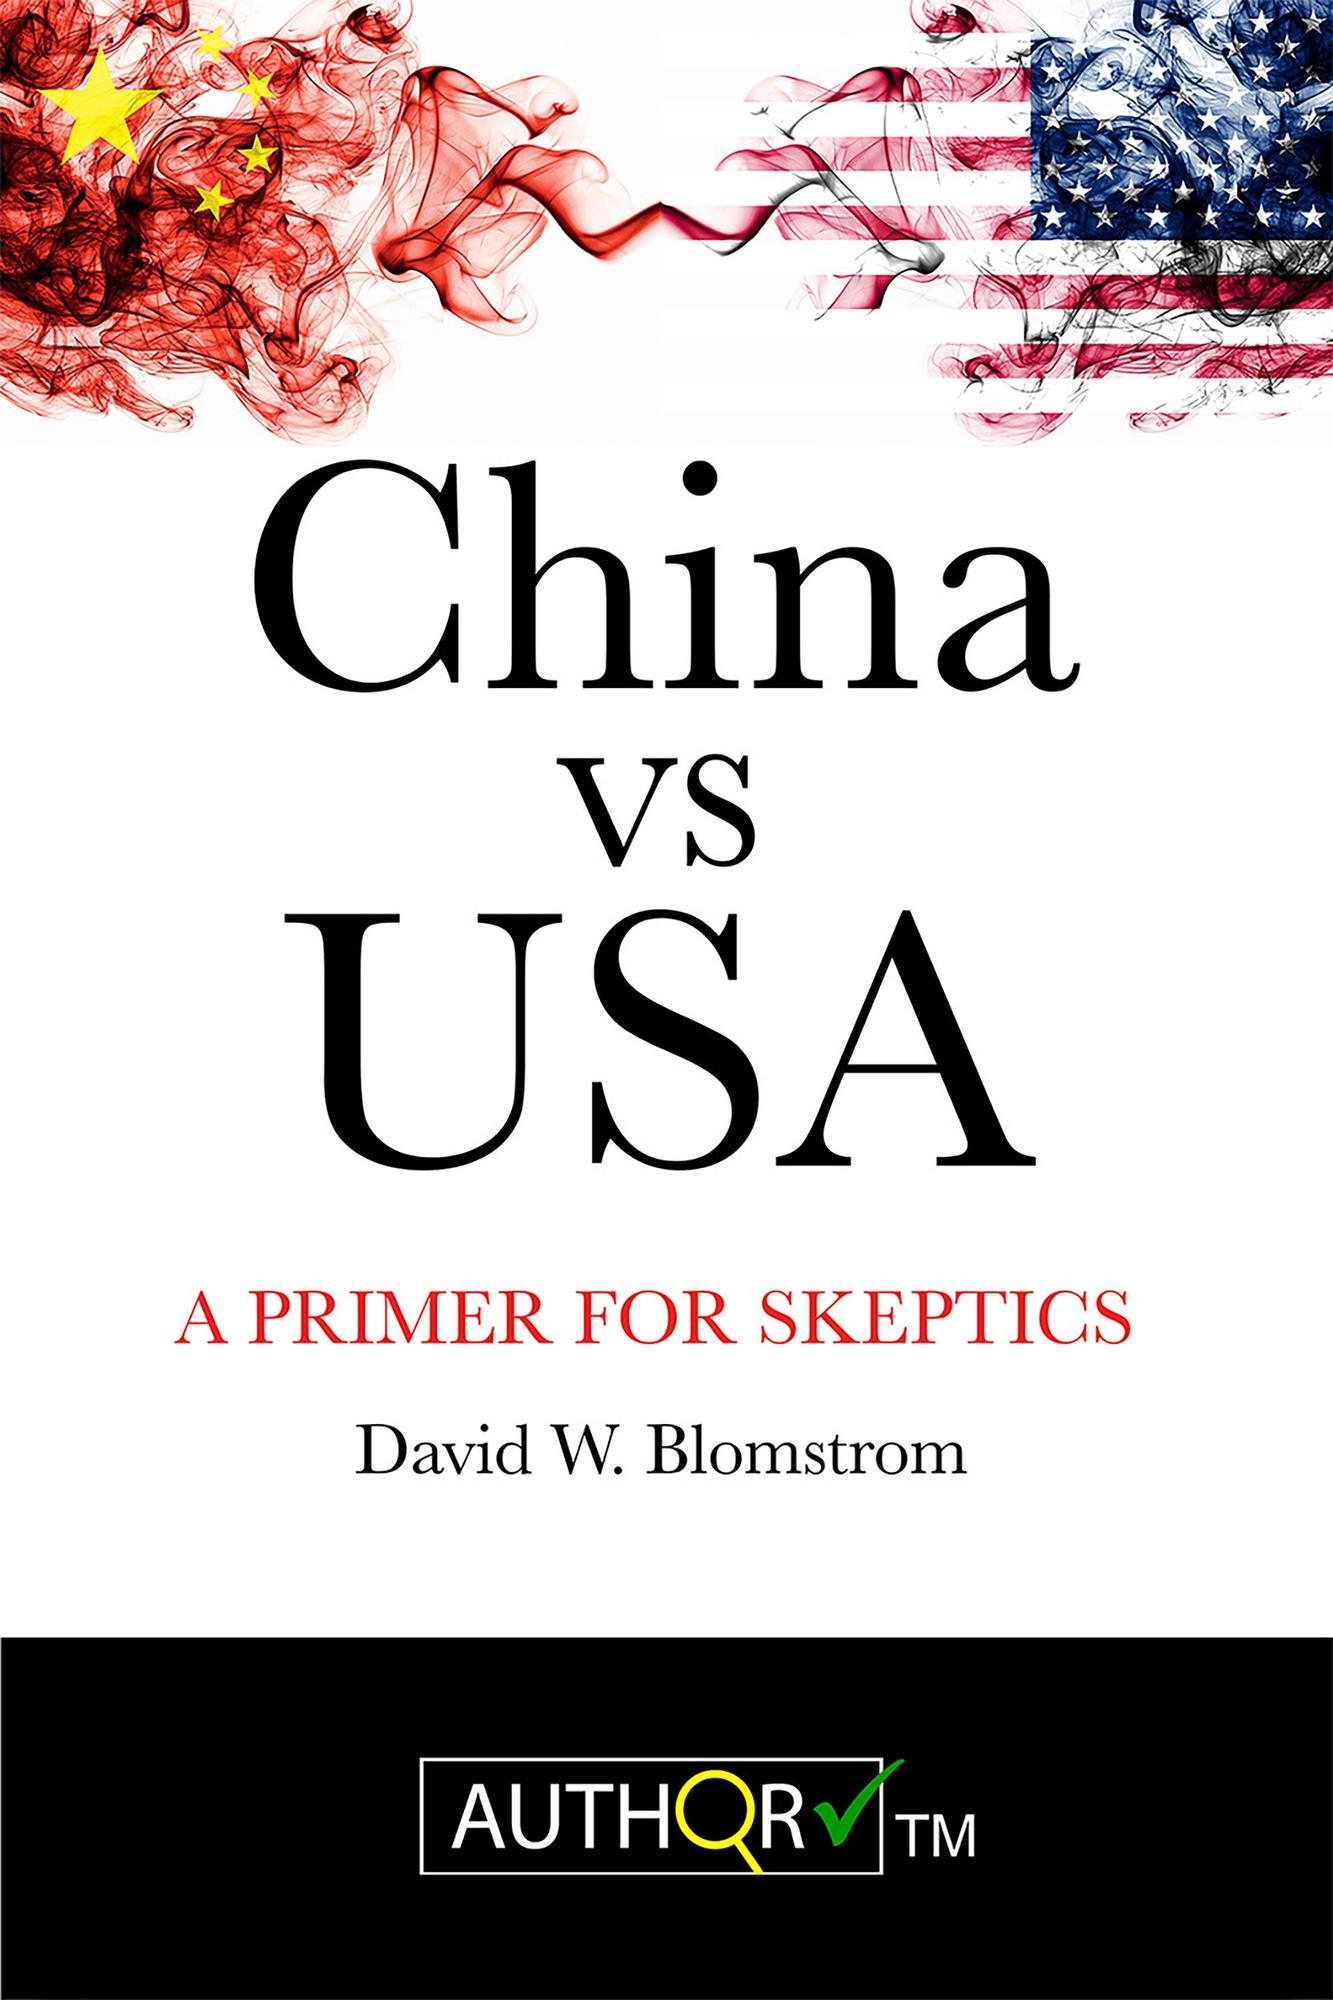 China vs USA by David Blomstrom